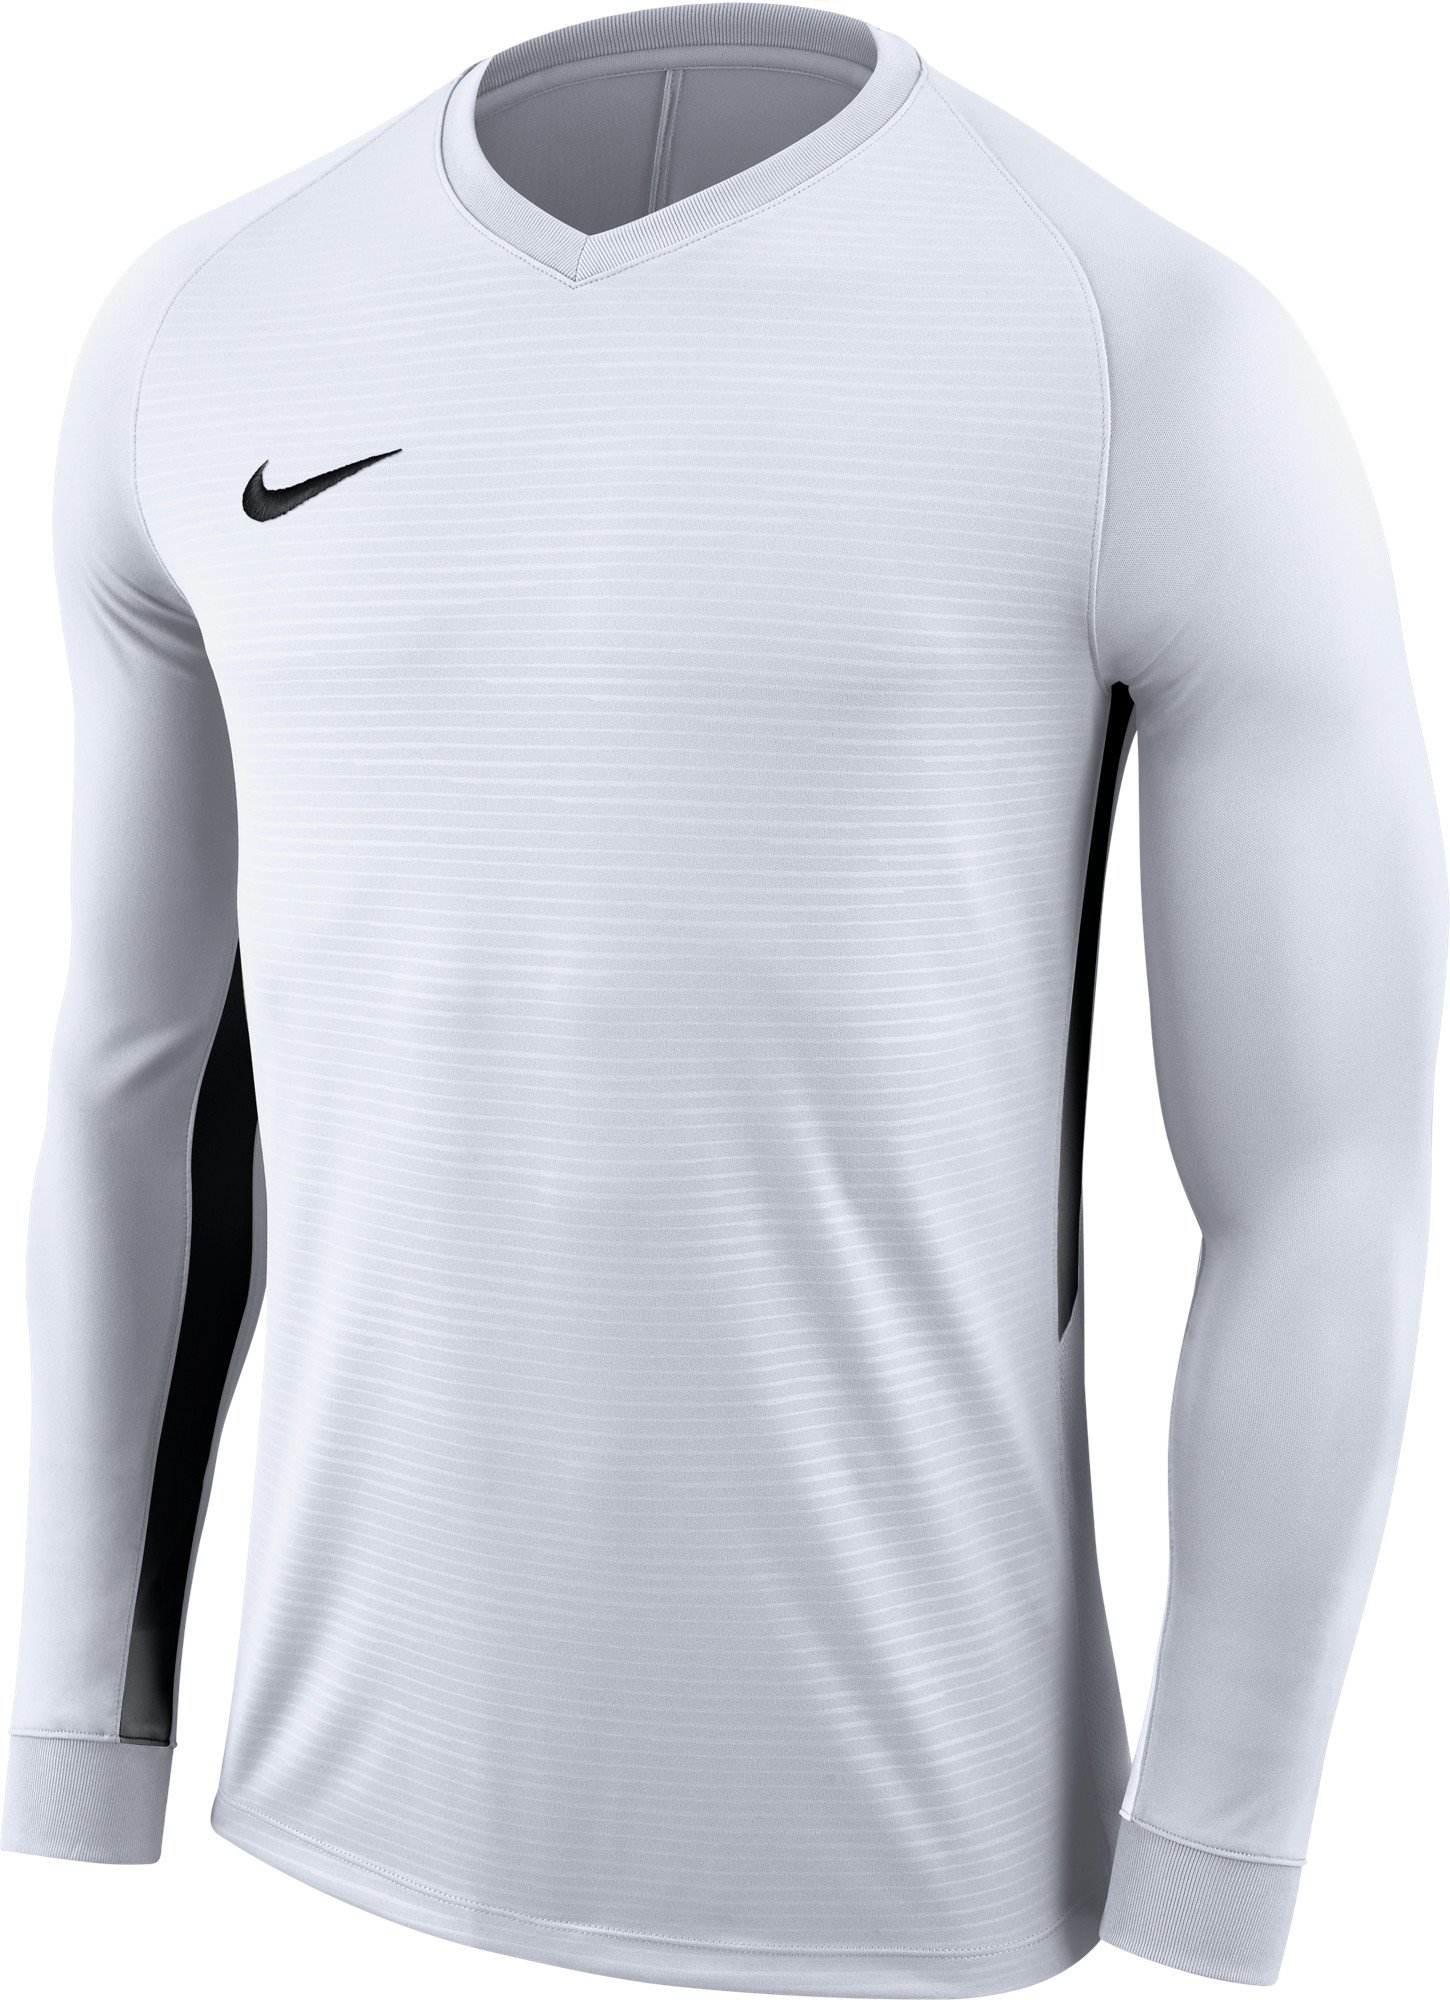 Camisa de manga larga Nike M NK DRY TIEMPO PREM JSY LS